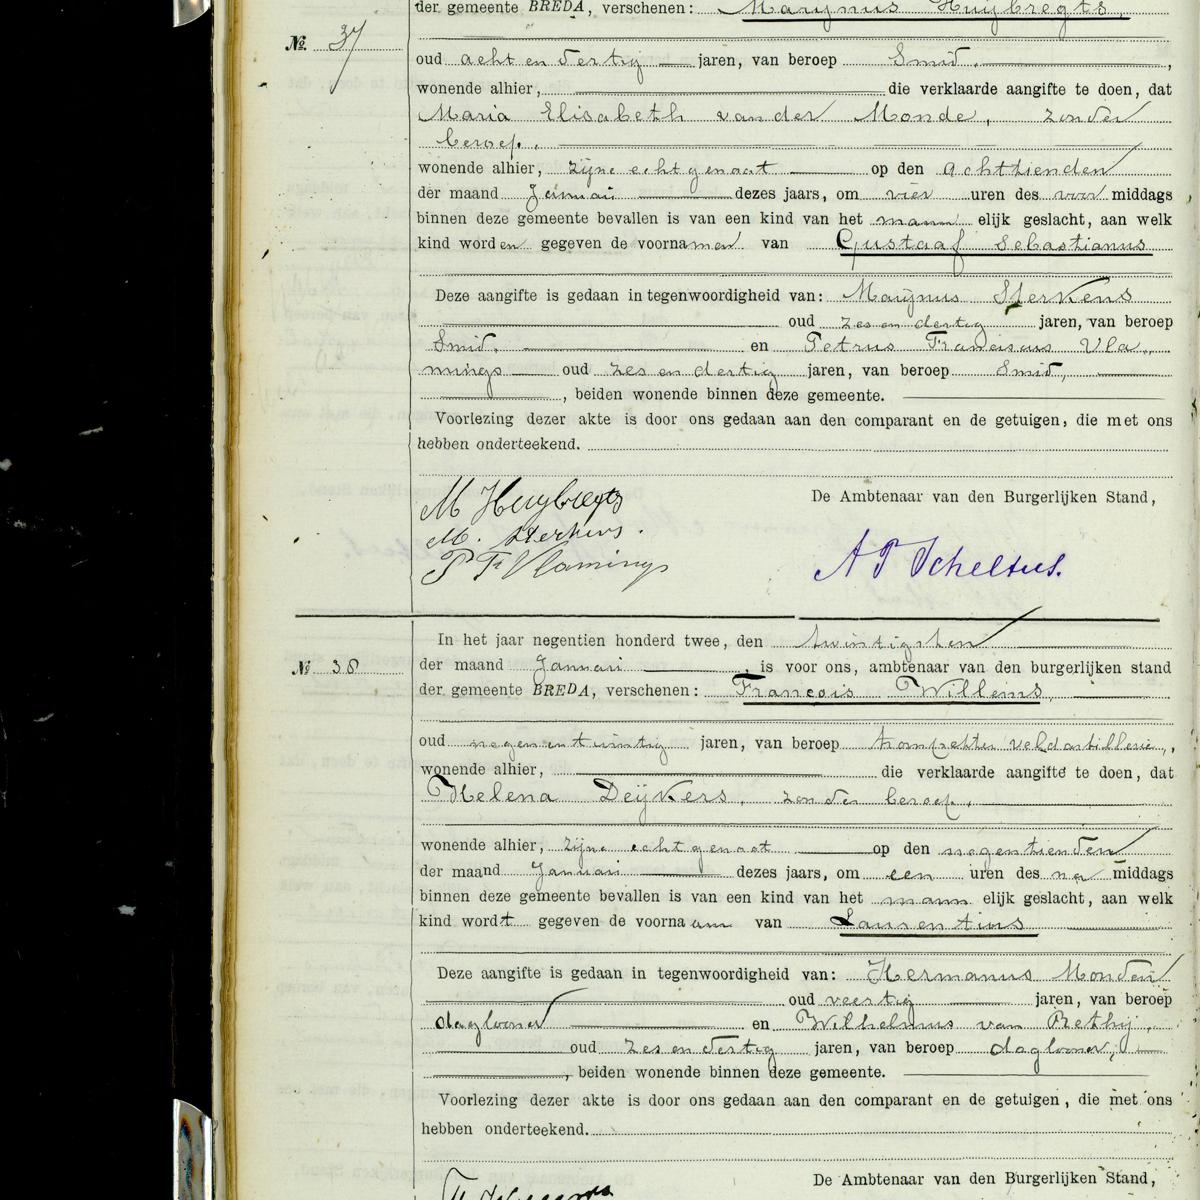 Civil registry of births, Breda, 1902, records 37-38